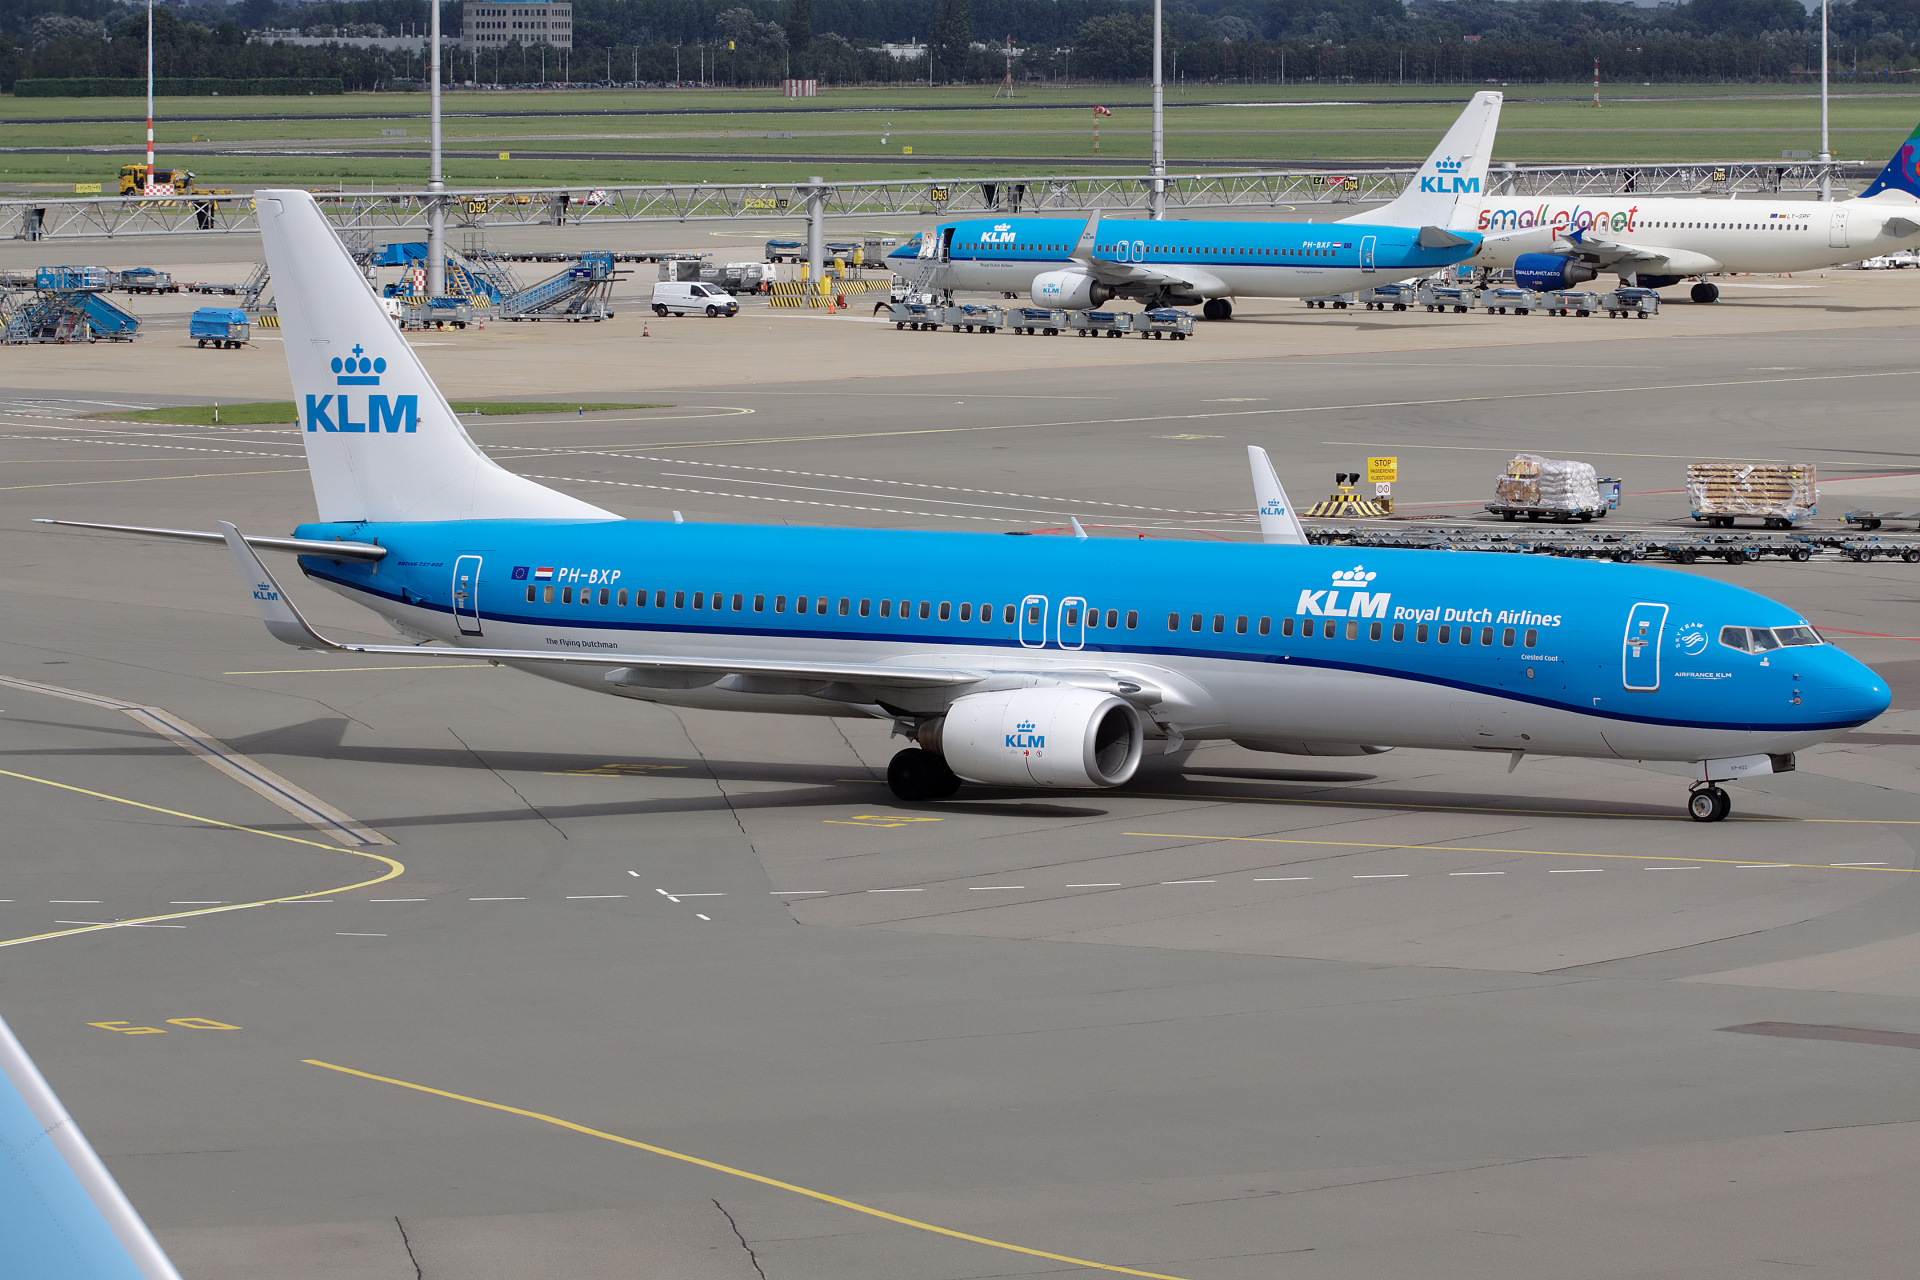 PH-BXP, KLM Royal Dutch Airlines (Aircraft » Schiphol Spotting » Boeing 737-900 » KLM Royal Dutch Airlines)